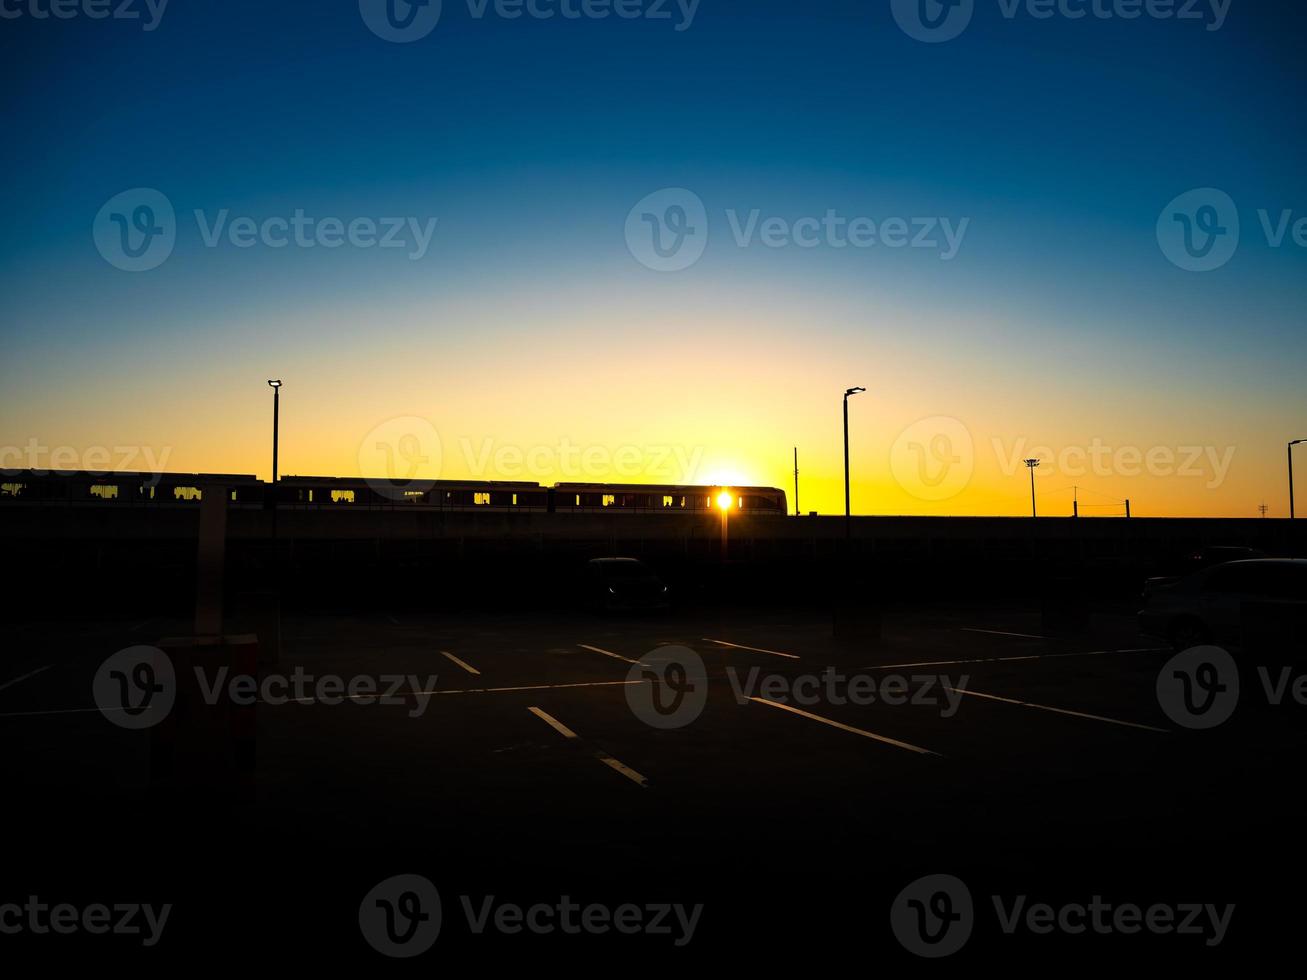 silhouet van sky train inkomend of uitgaand in de prachtige zonsondergang. foto